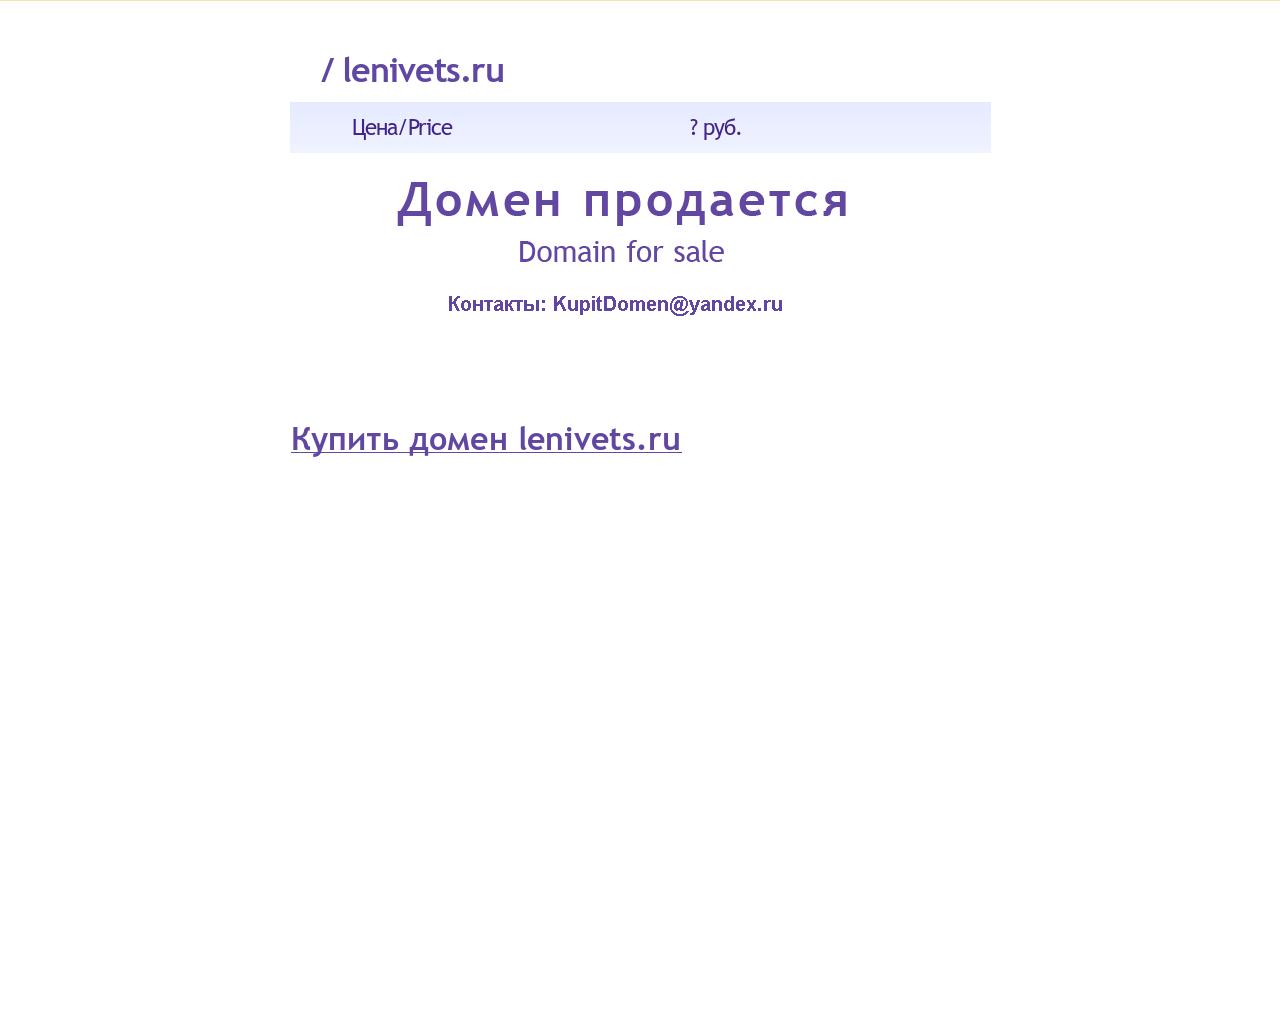 Изображение сайта lenivets.ru в разрешении 1280x1024